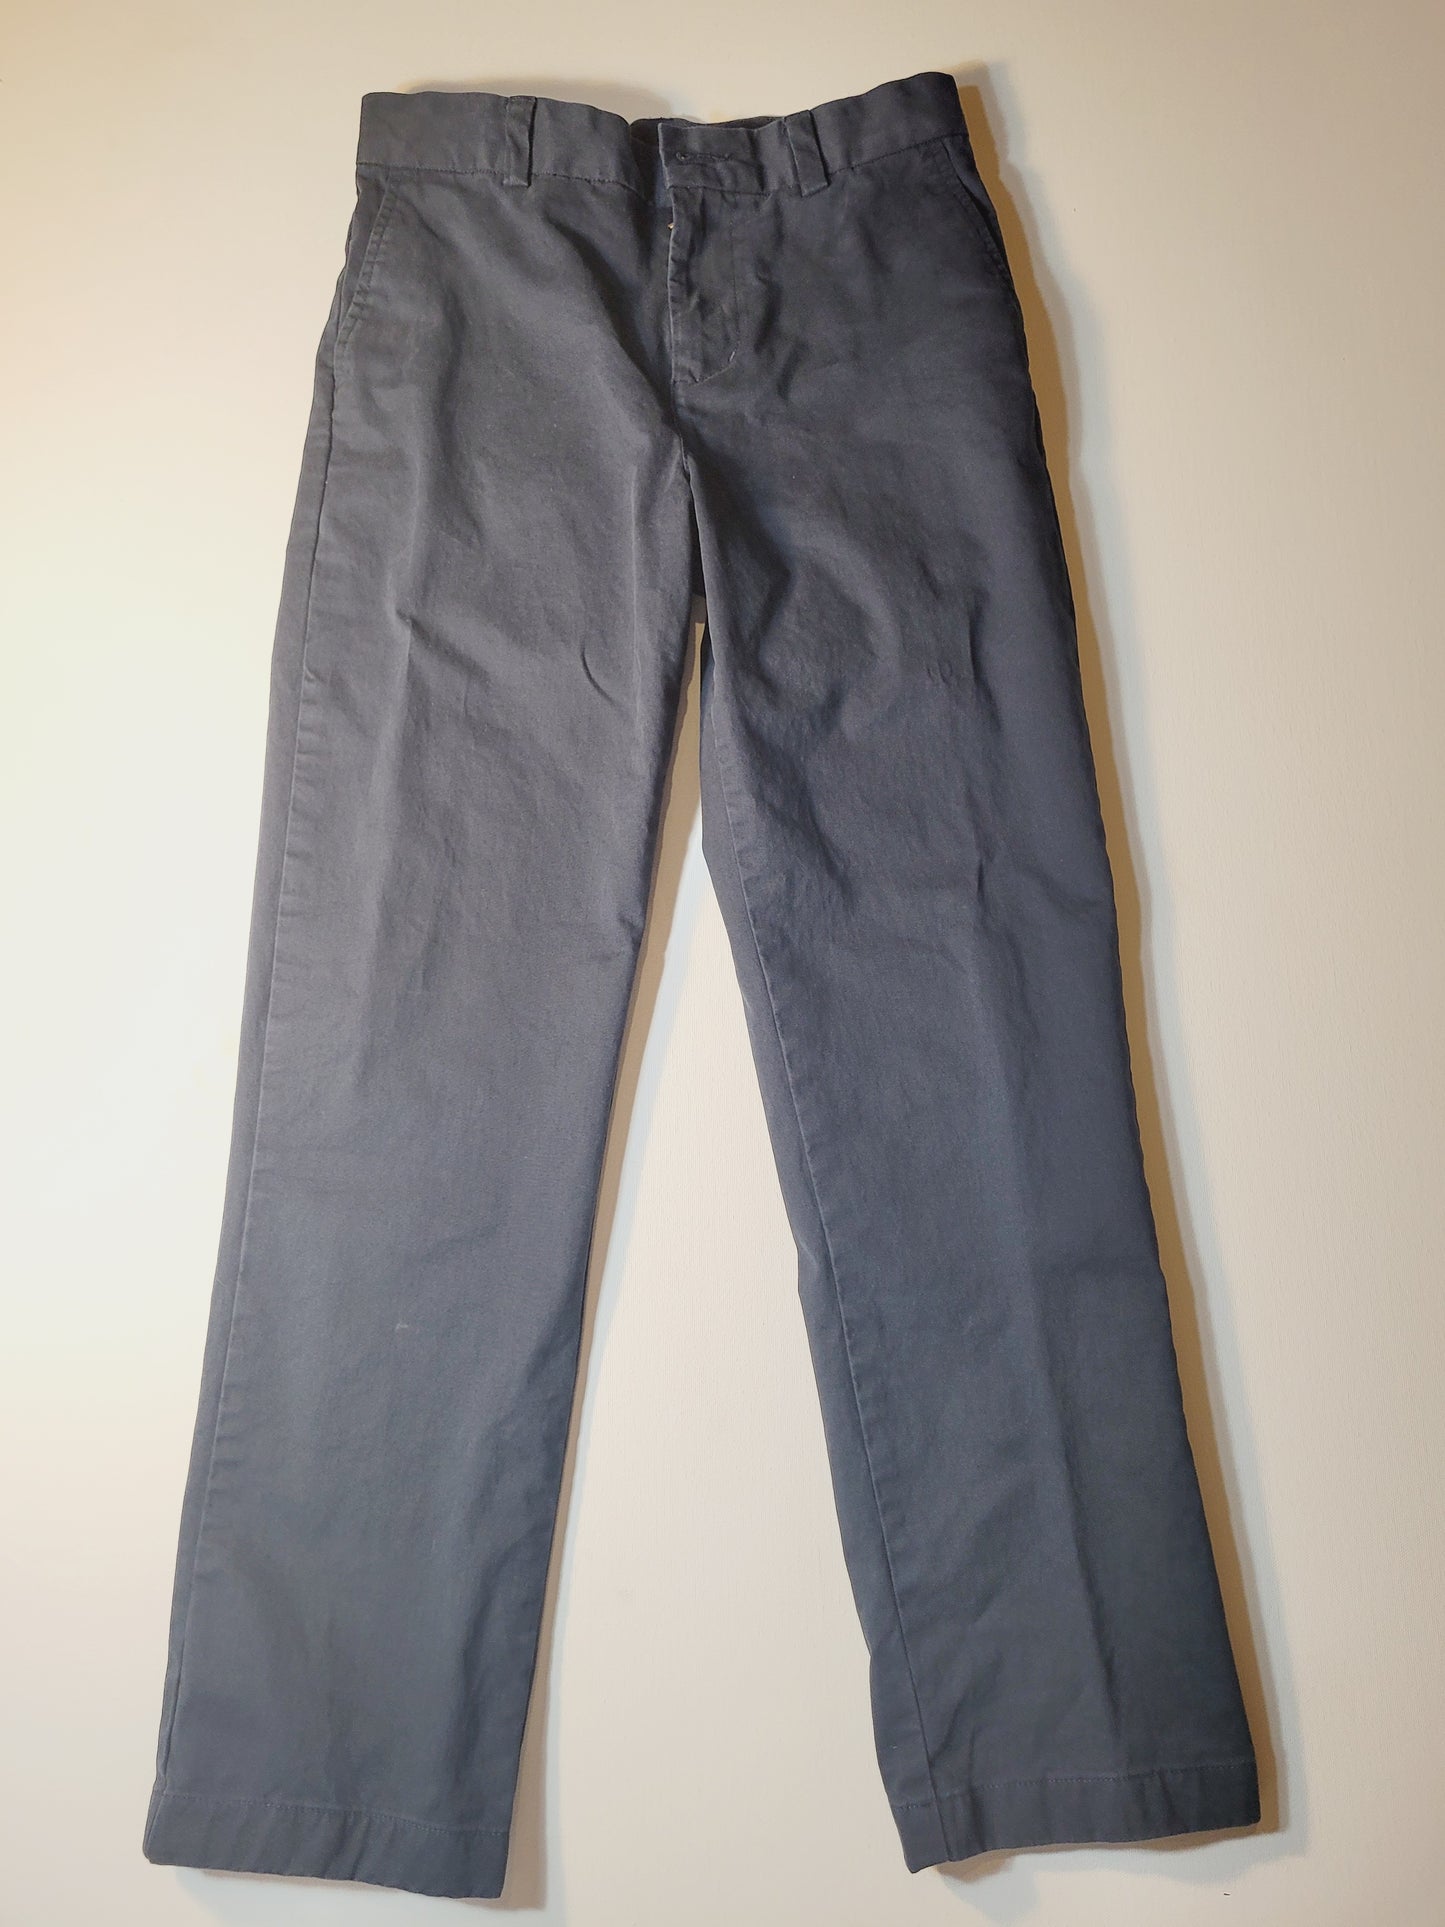 Vineyard Vines Boys Navy Blue Pants Size 12 PPU 45226